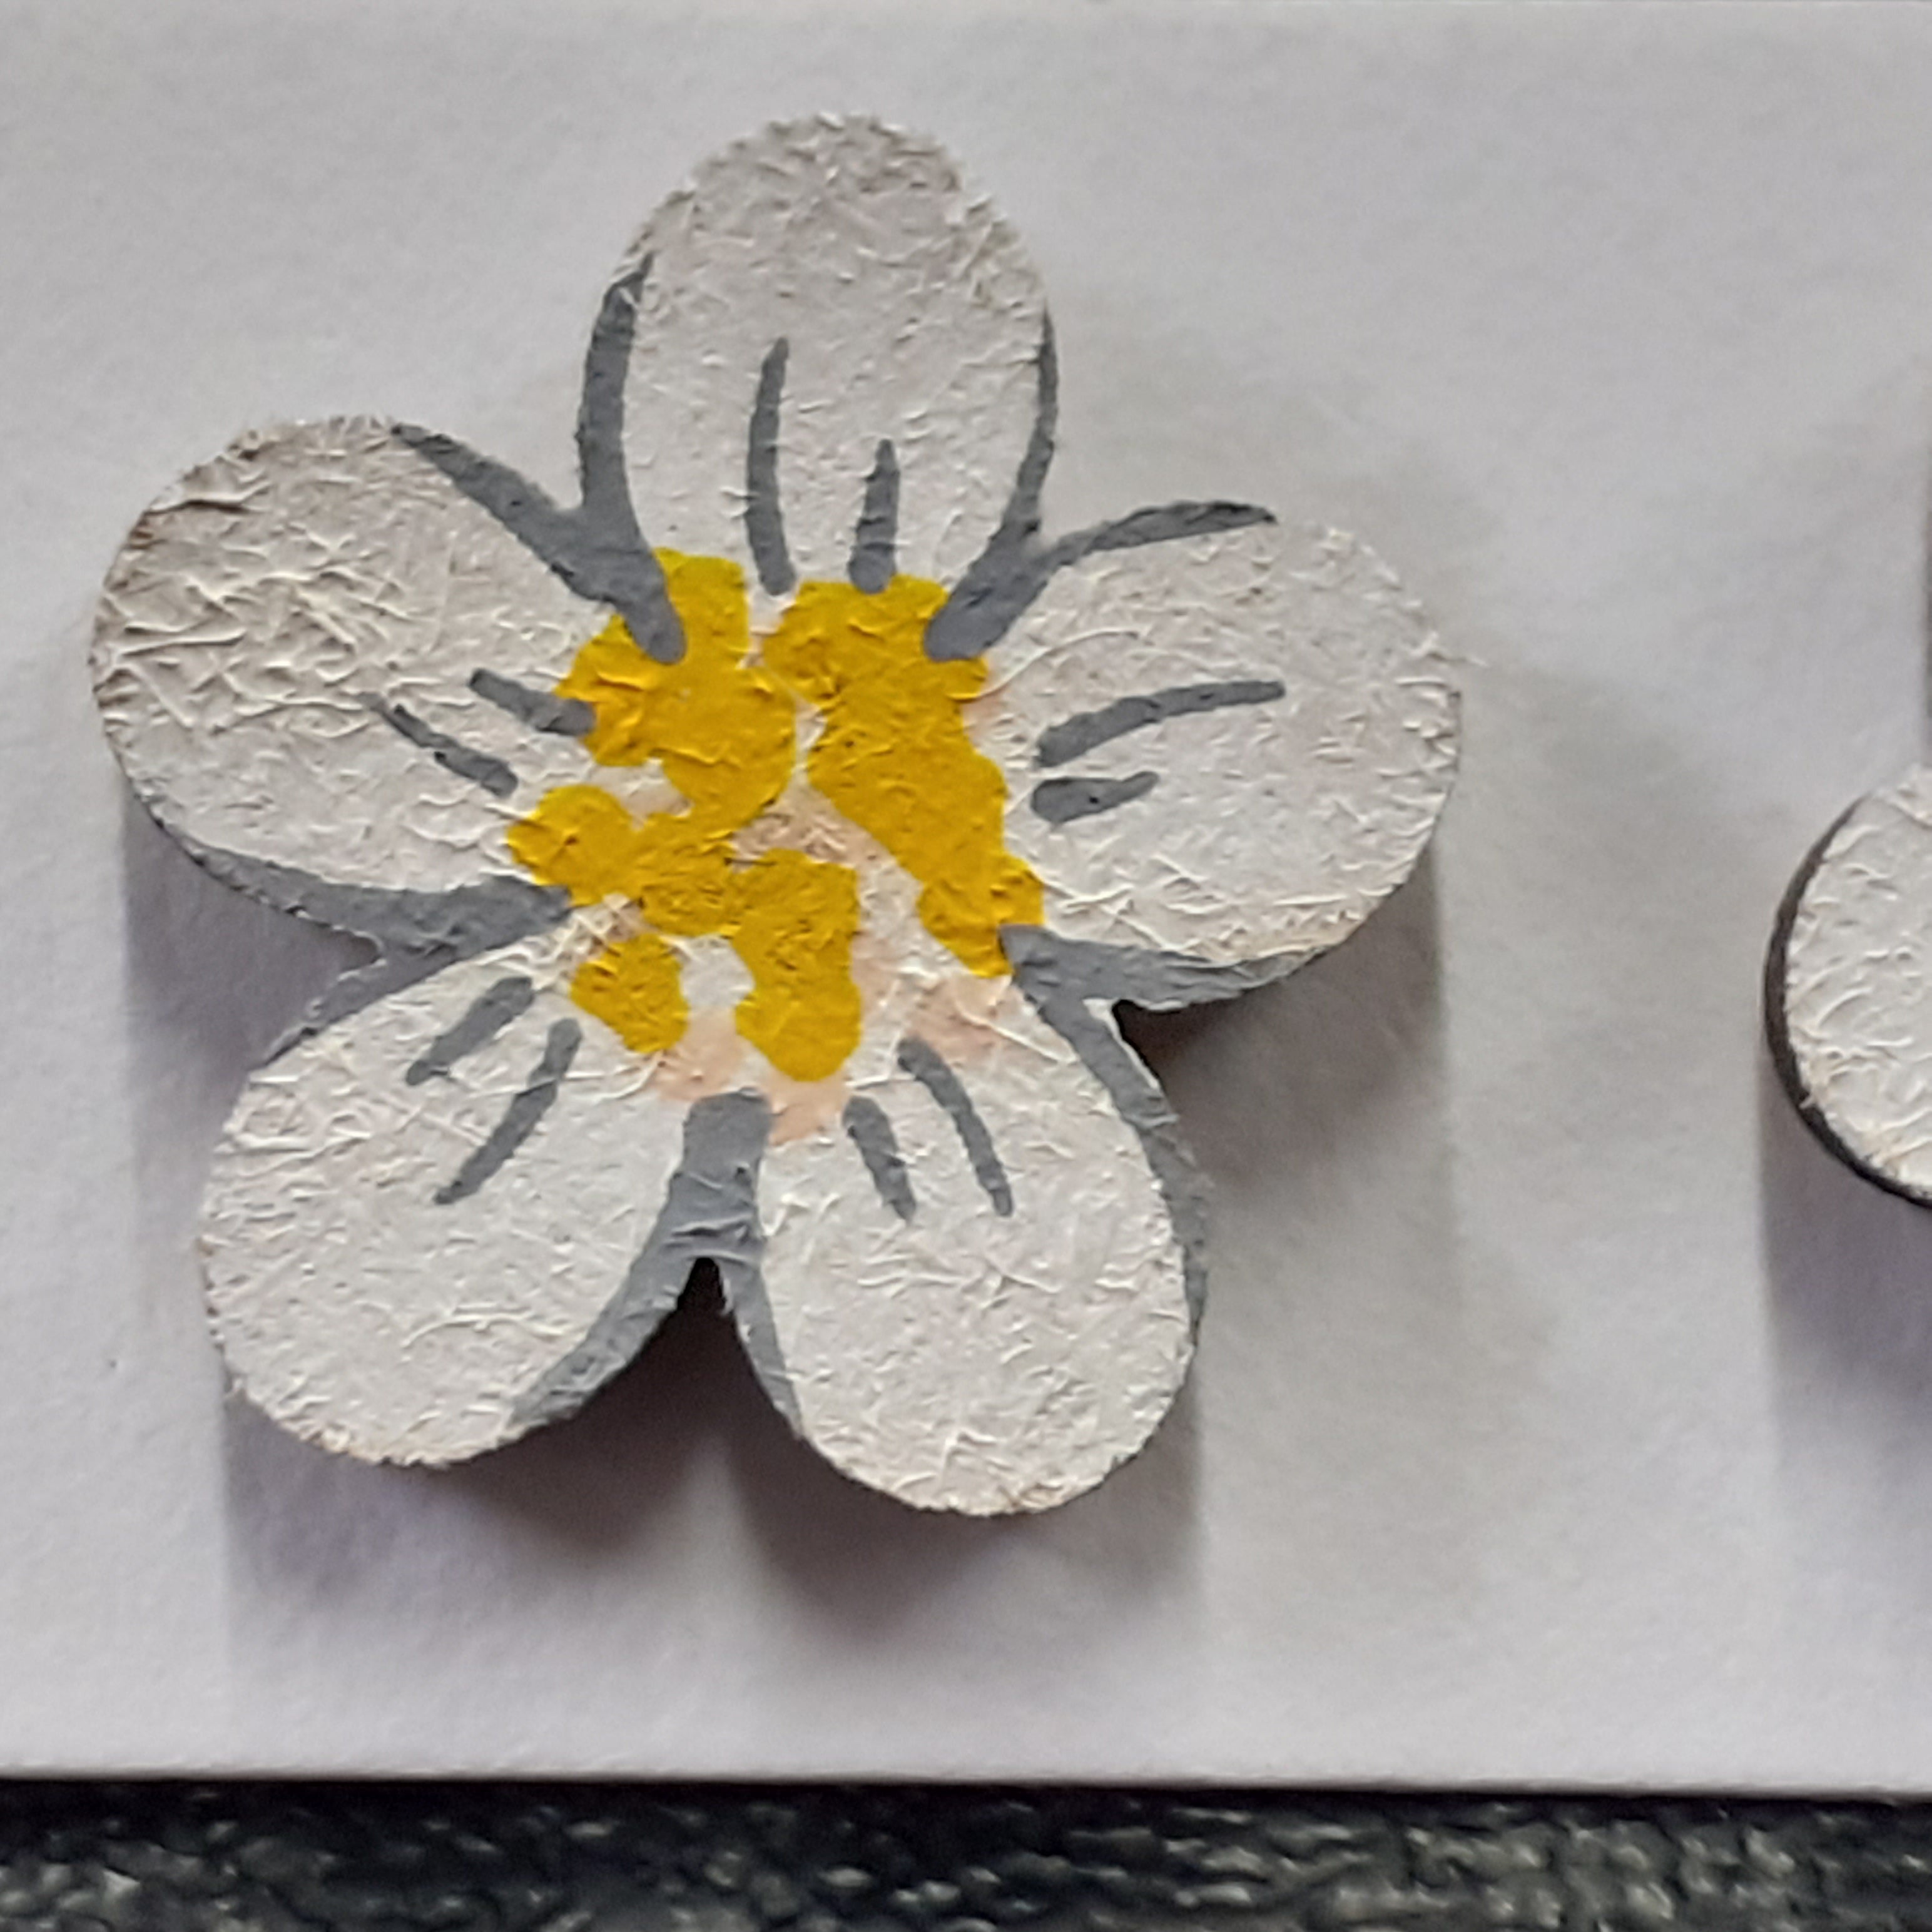 White Daisy Flower Stud Earrings (Pair of) - Luvit!